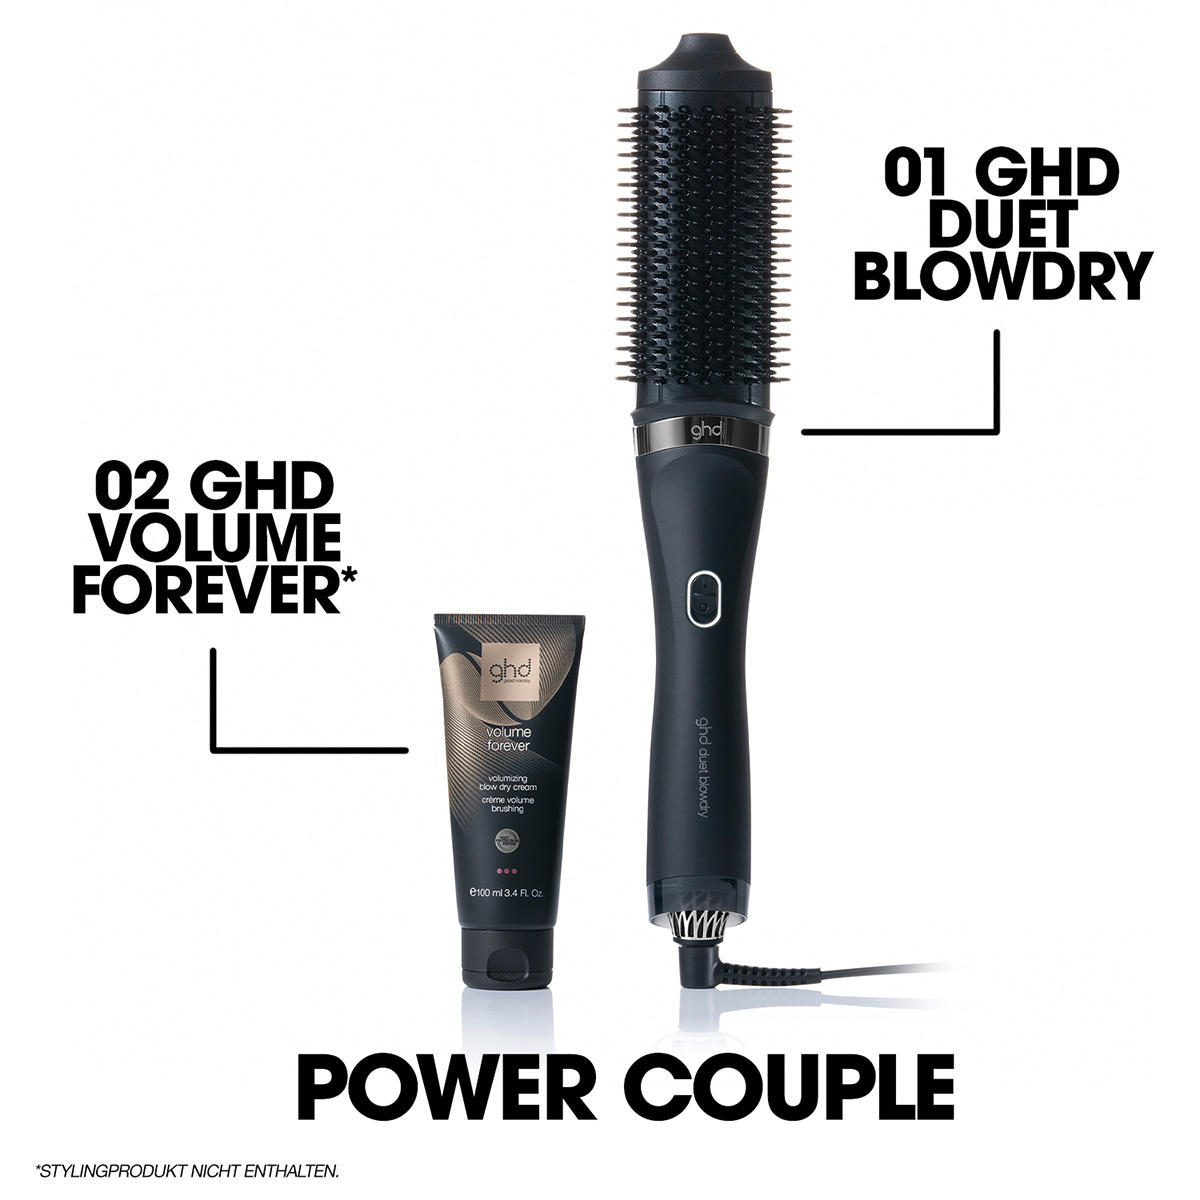 ghd duet blowdry Hair Dryer Brush noir - 10